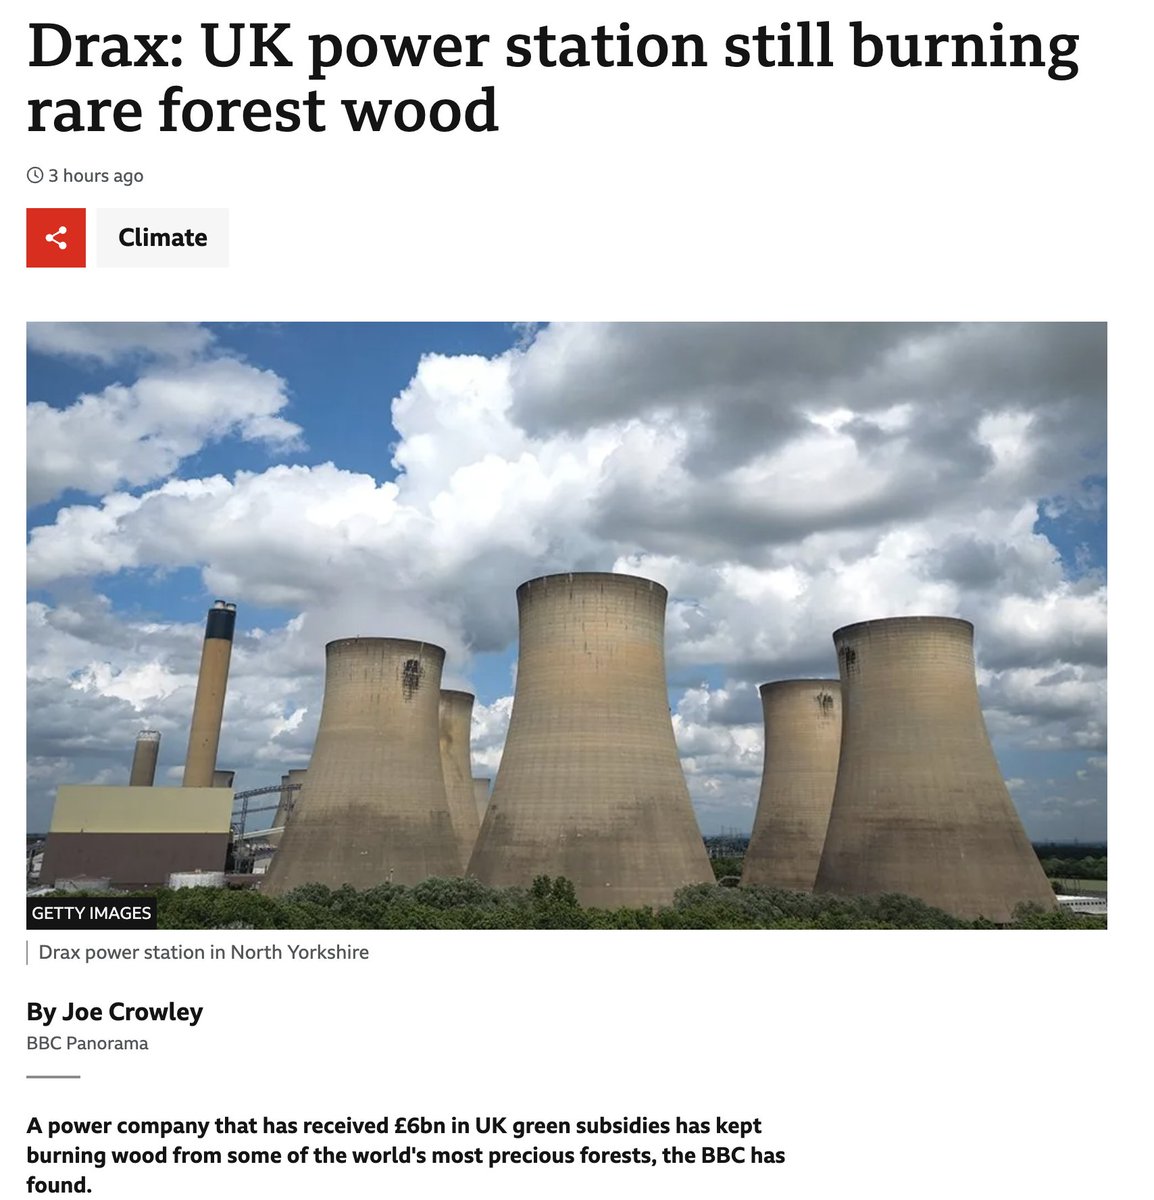 bbc.co.uk/news/science-e…